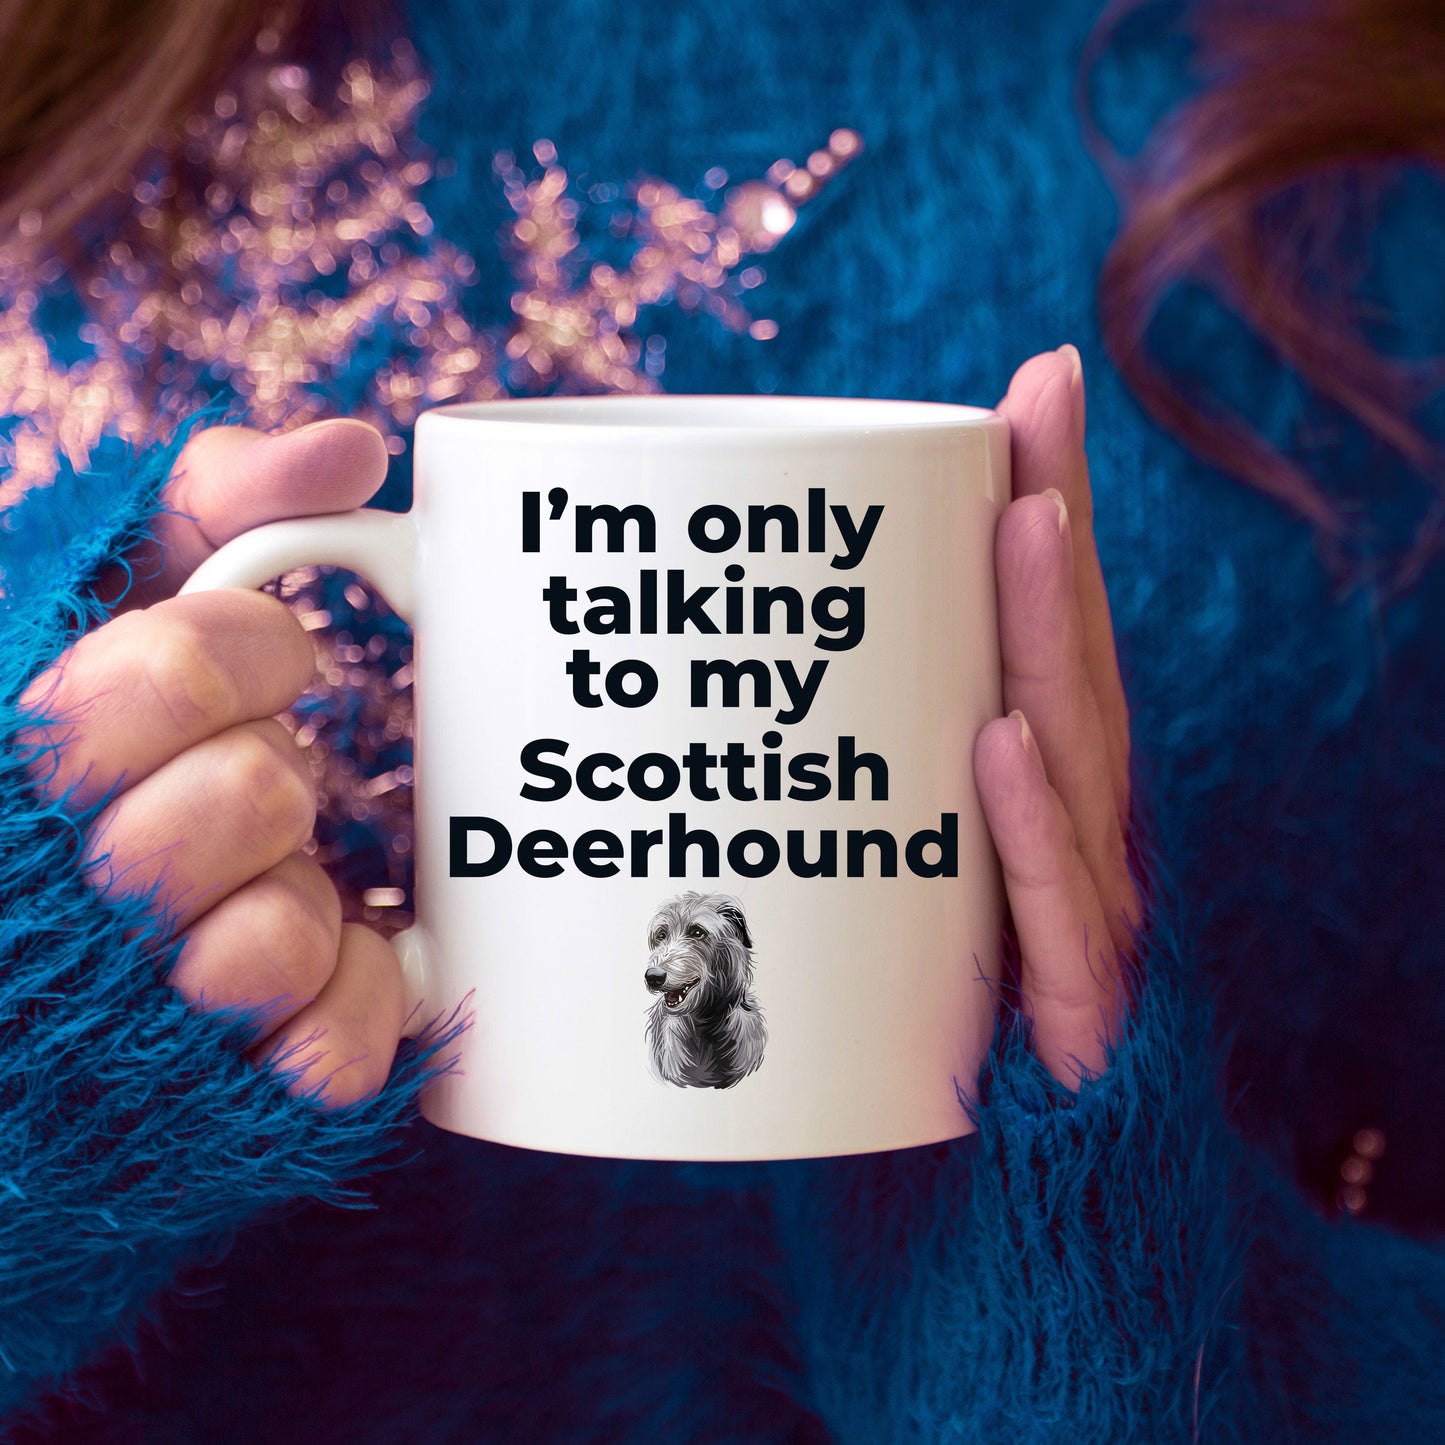 Scottish Deerhound Dog Funny Coffee Mug - I'm only talking to my Scottish Deerhound